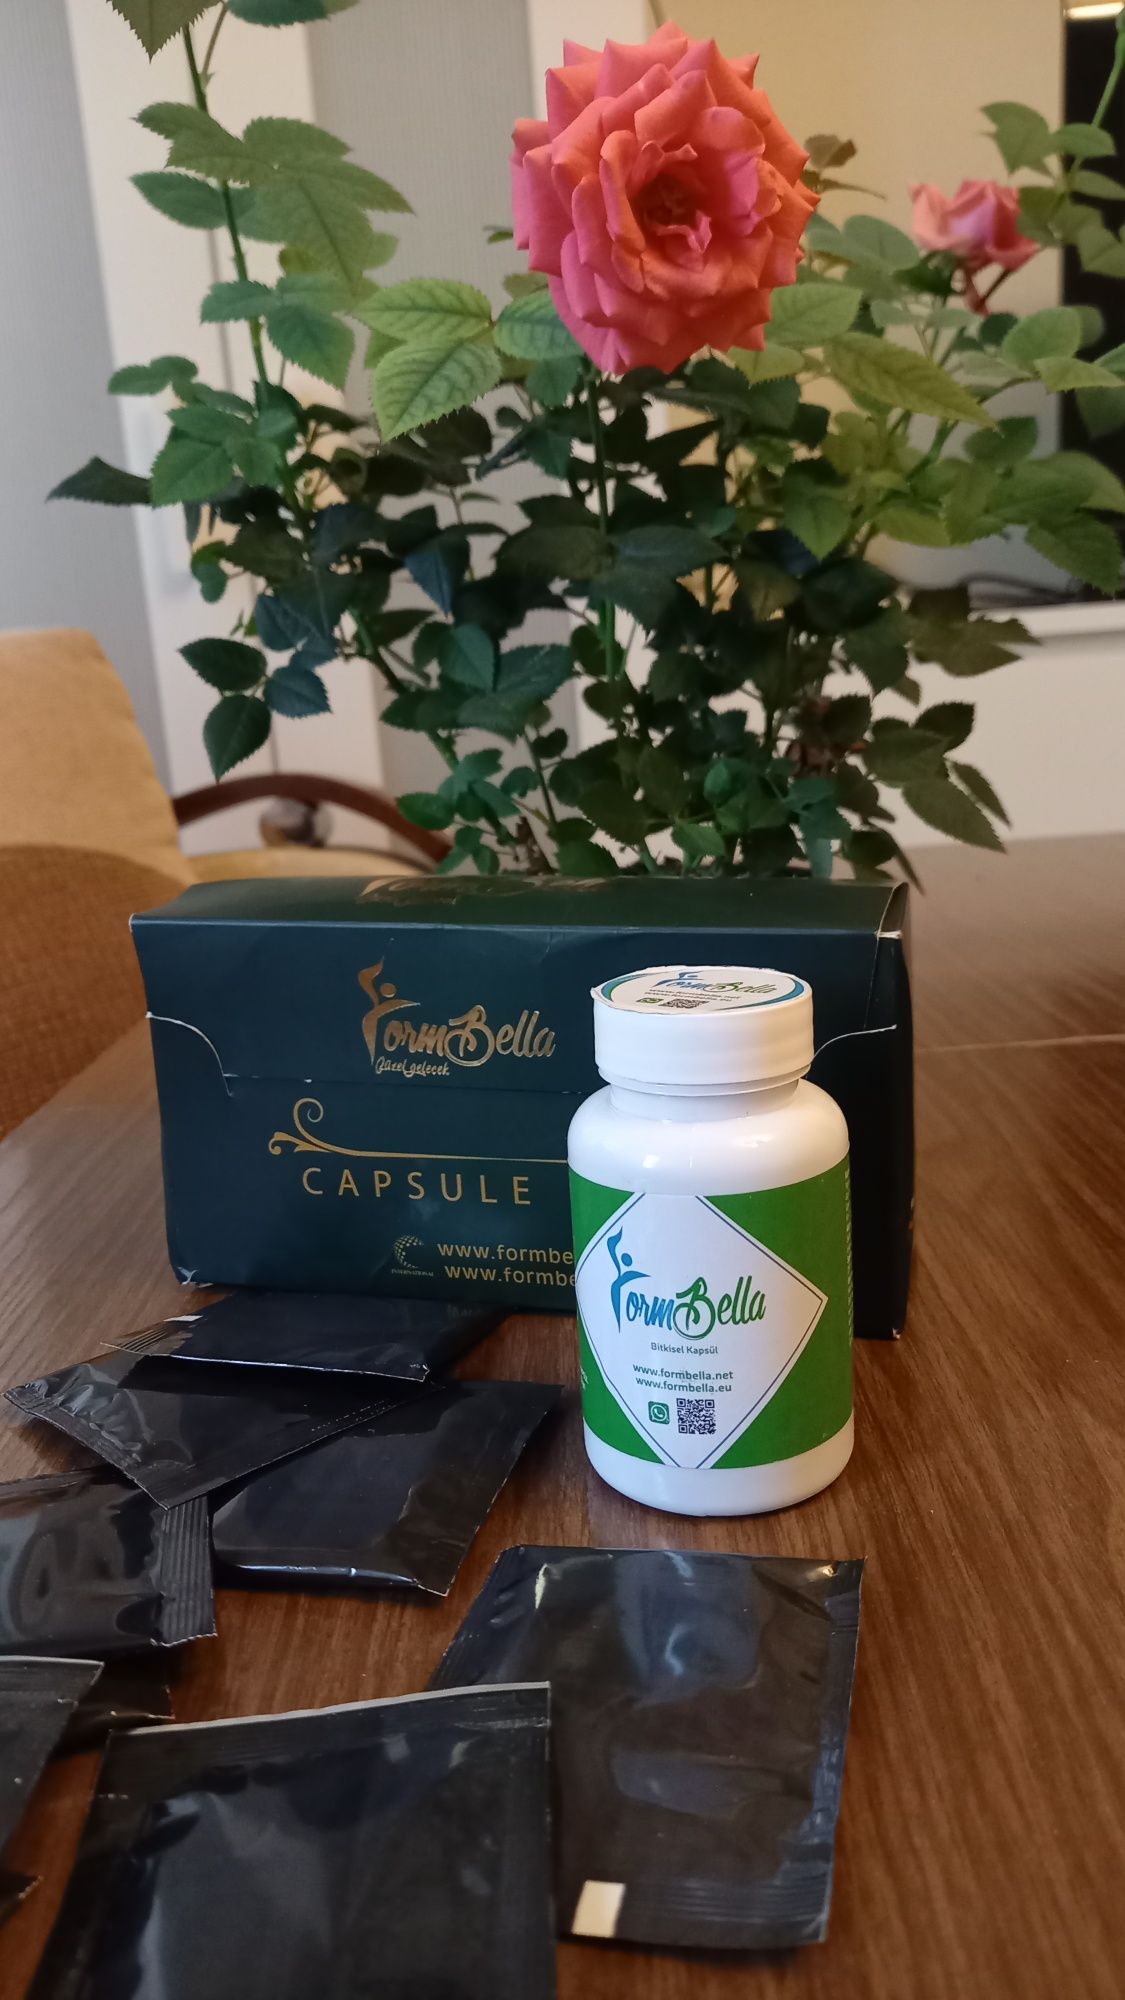 Formbella capsule & tea